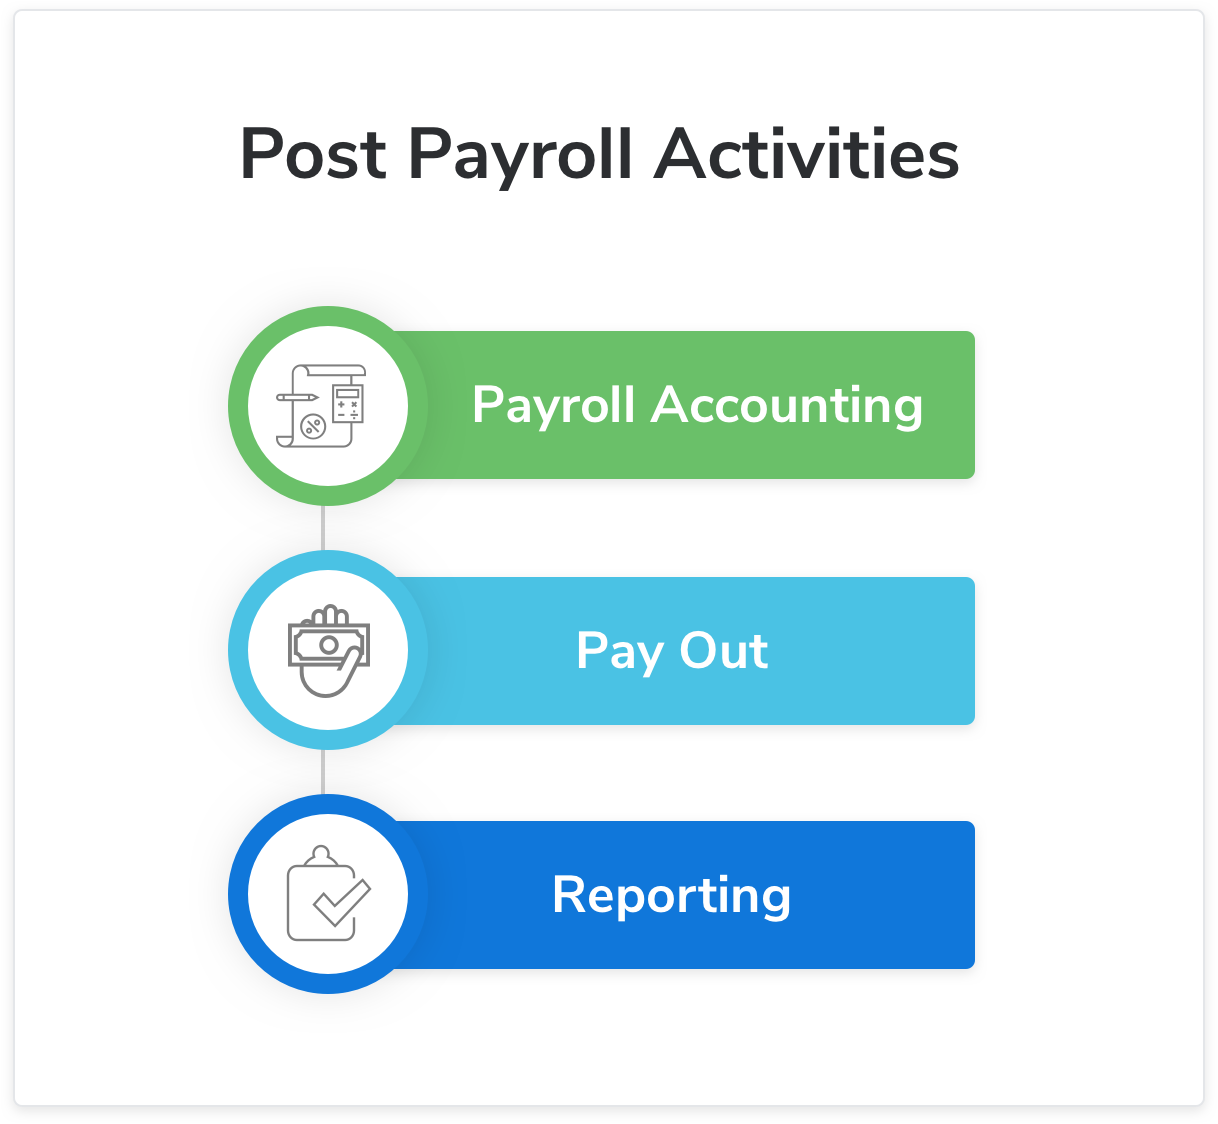 Post Payroll activities